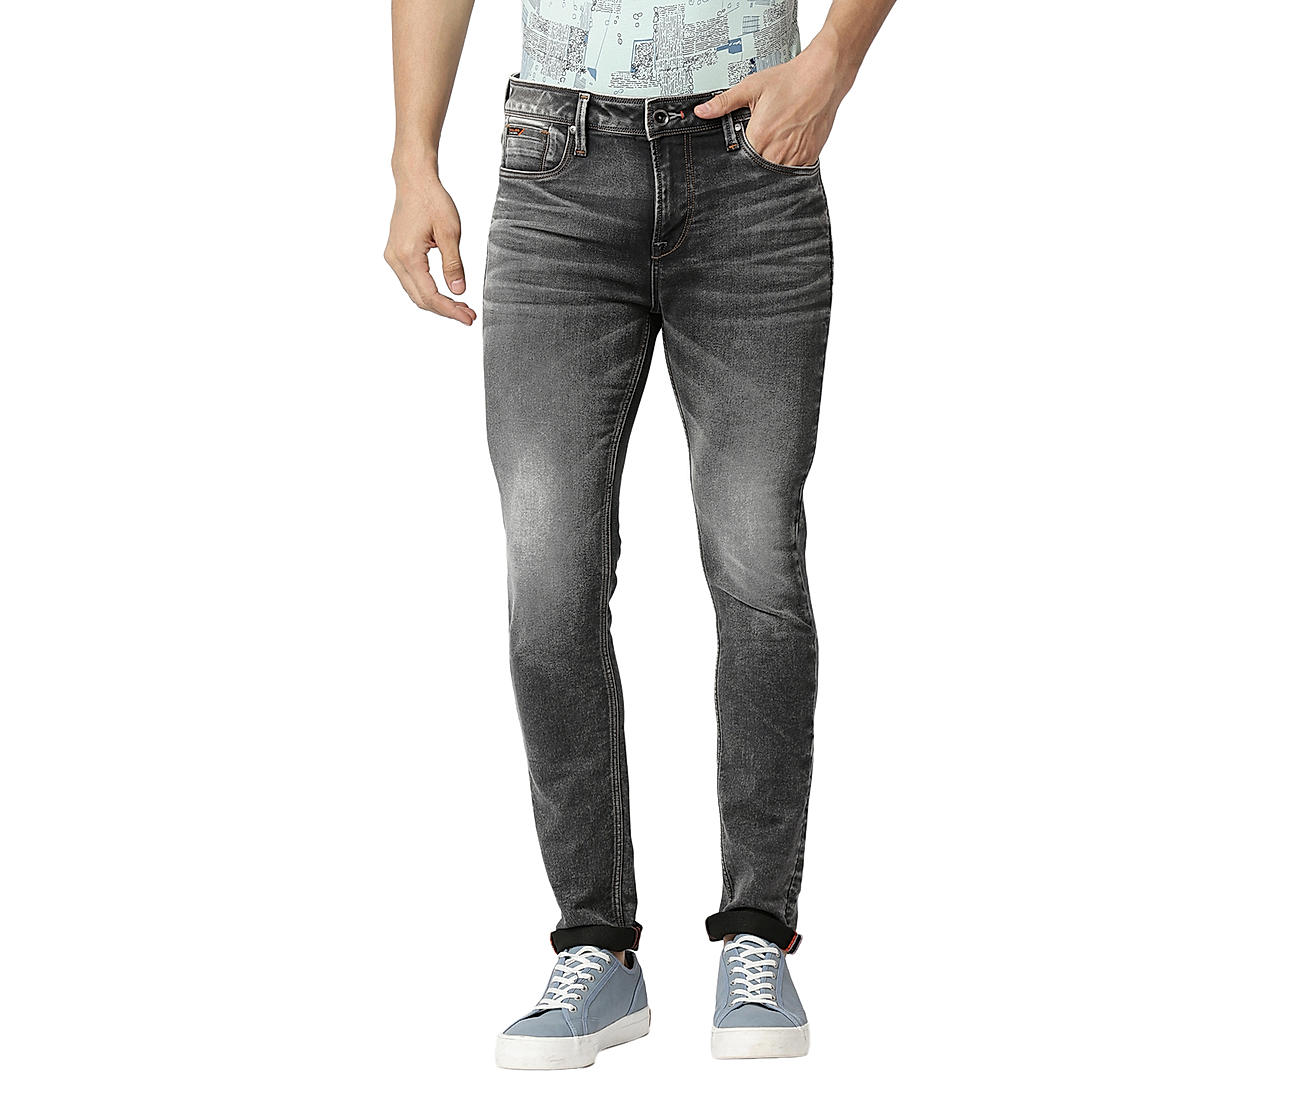 Buy Grey Solid Straight Fit Jeans for Men Online at Killer Jeans | 508997